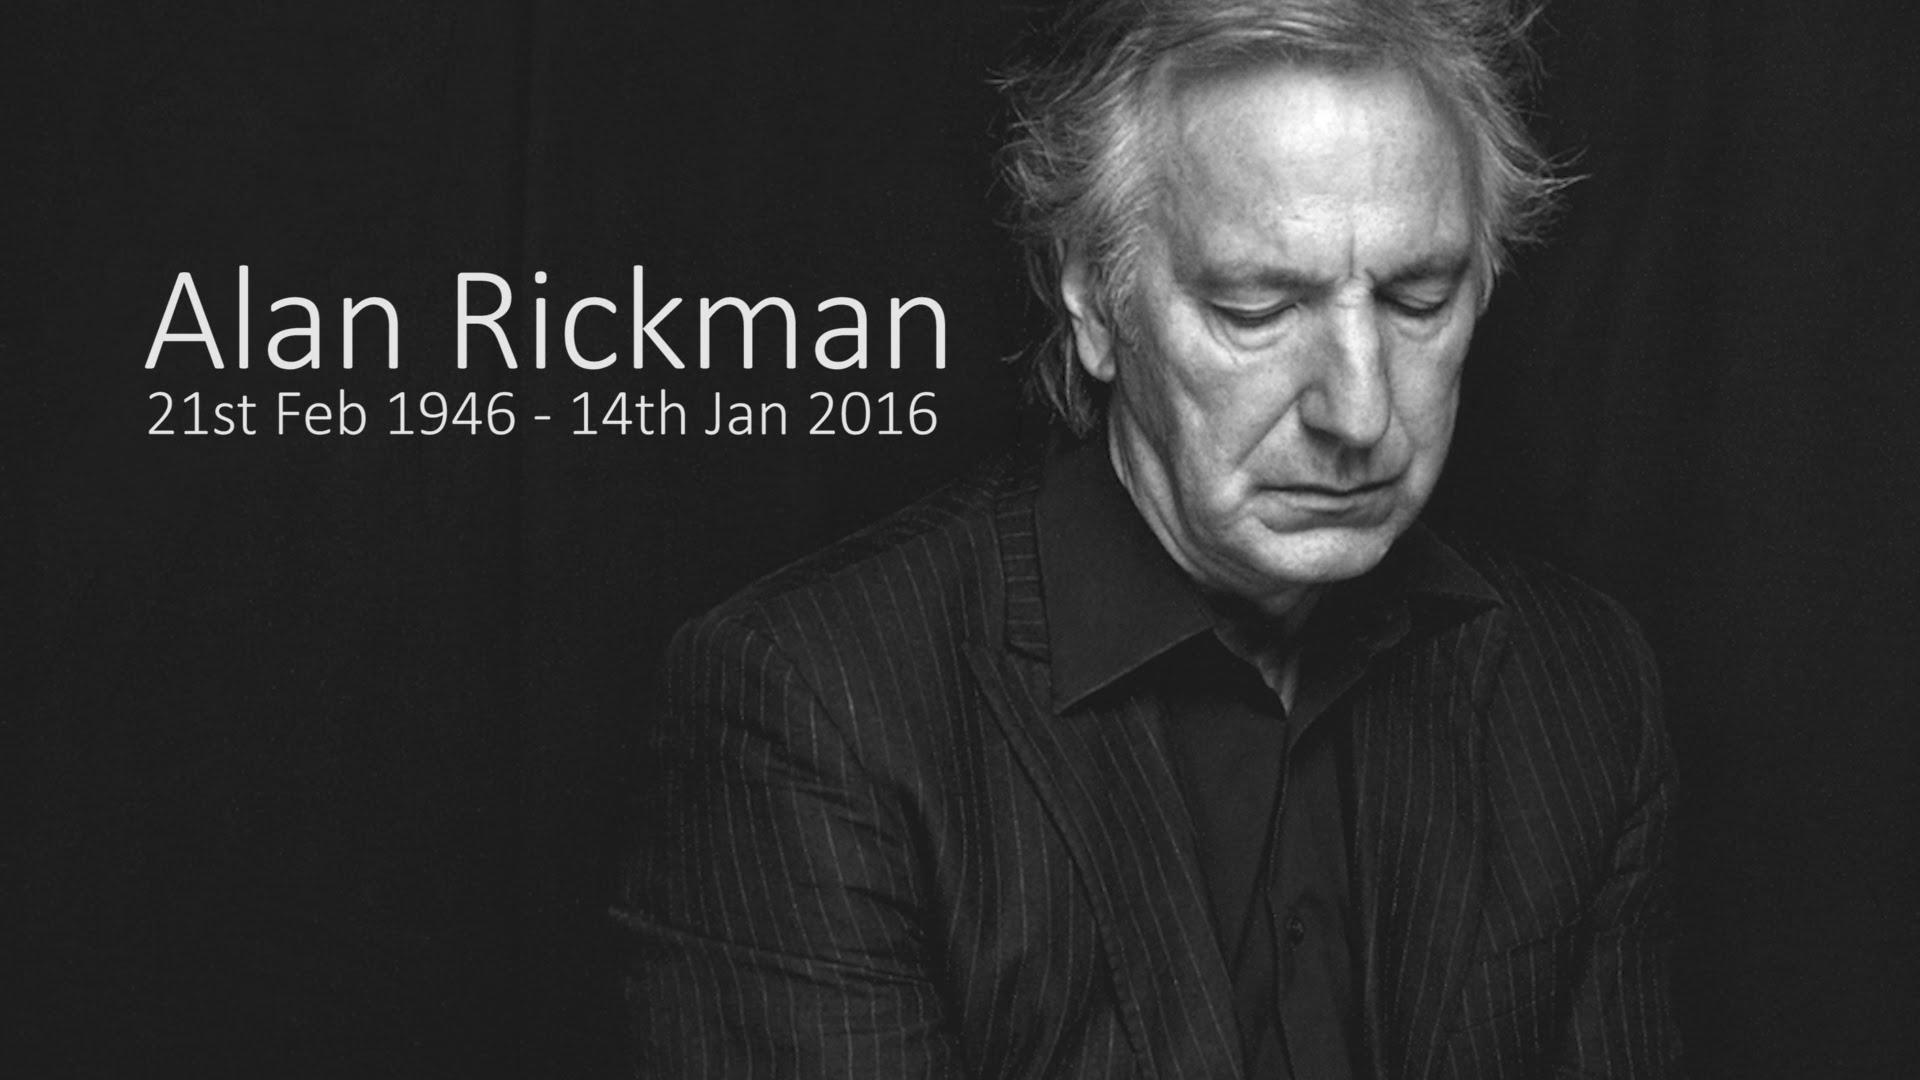 Alan Rickman: A Tribute. R.I.P